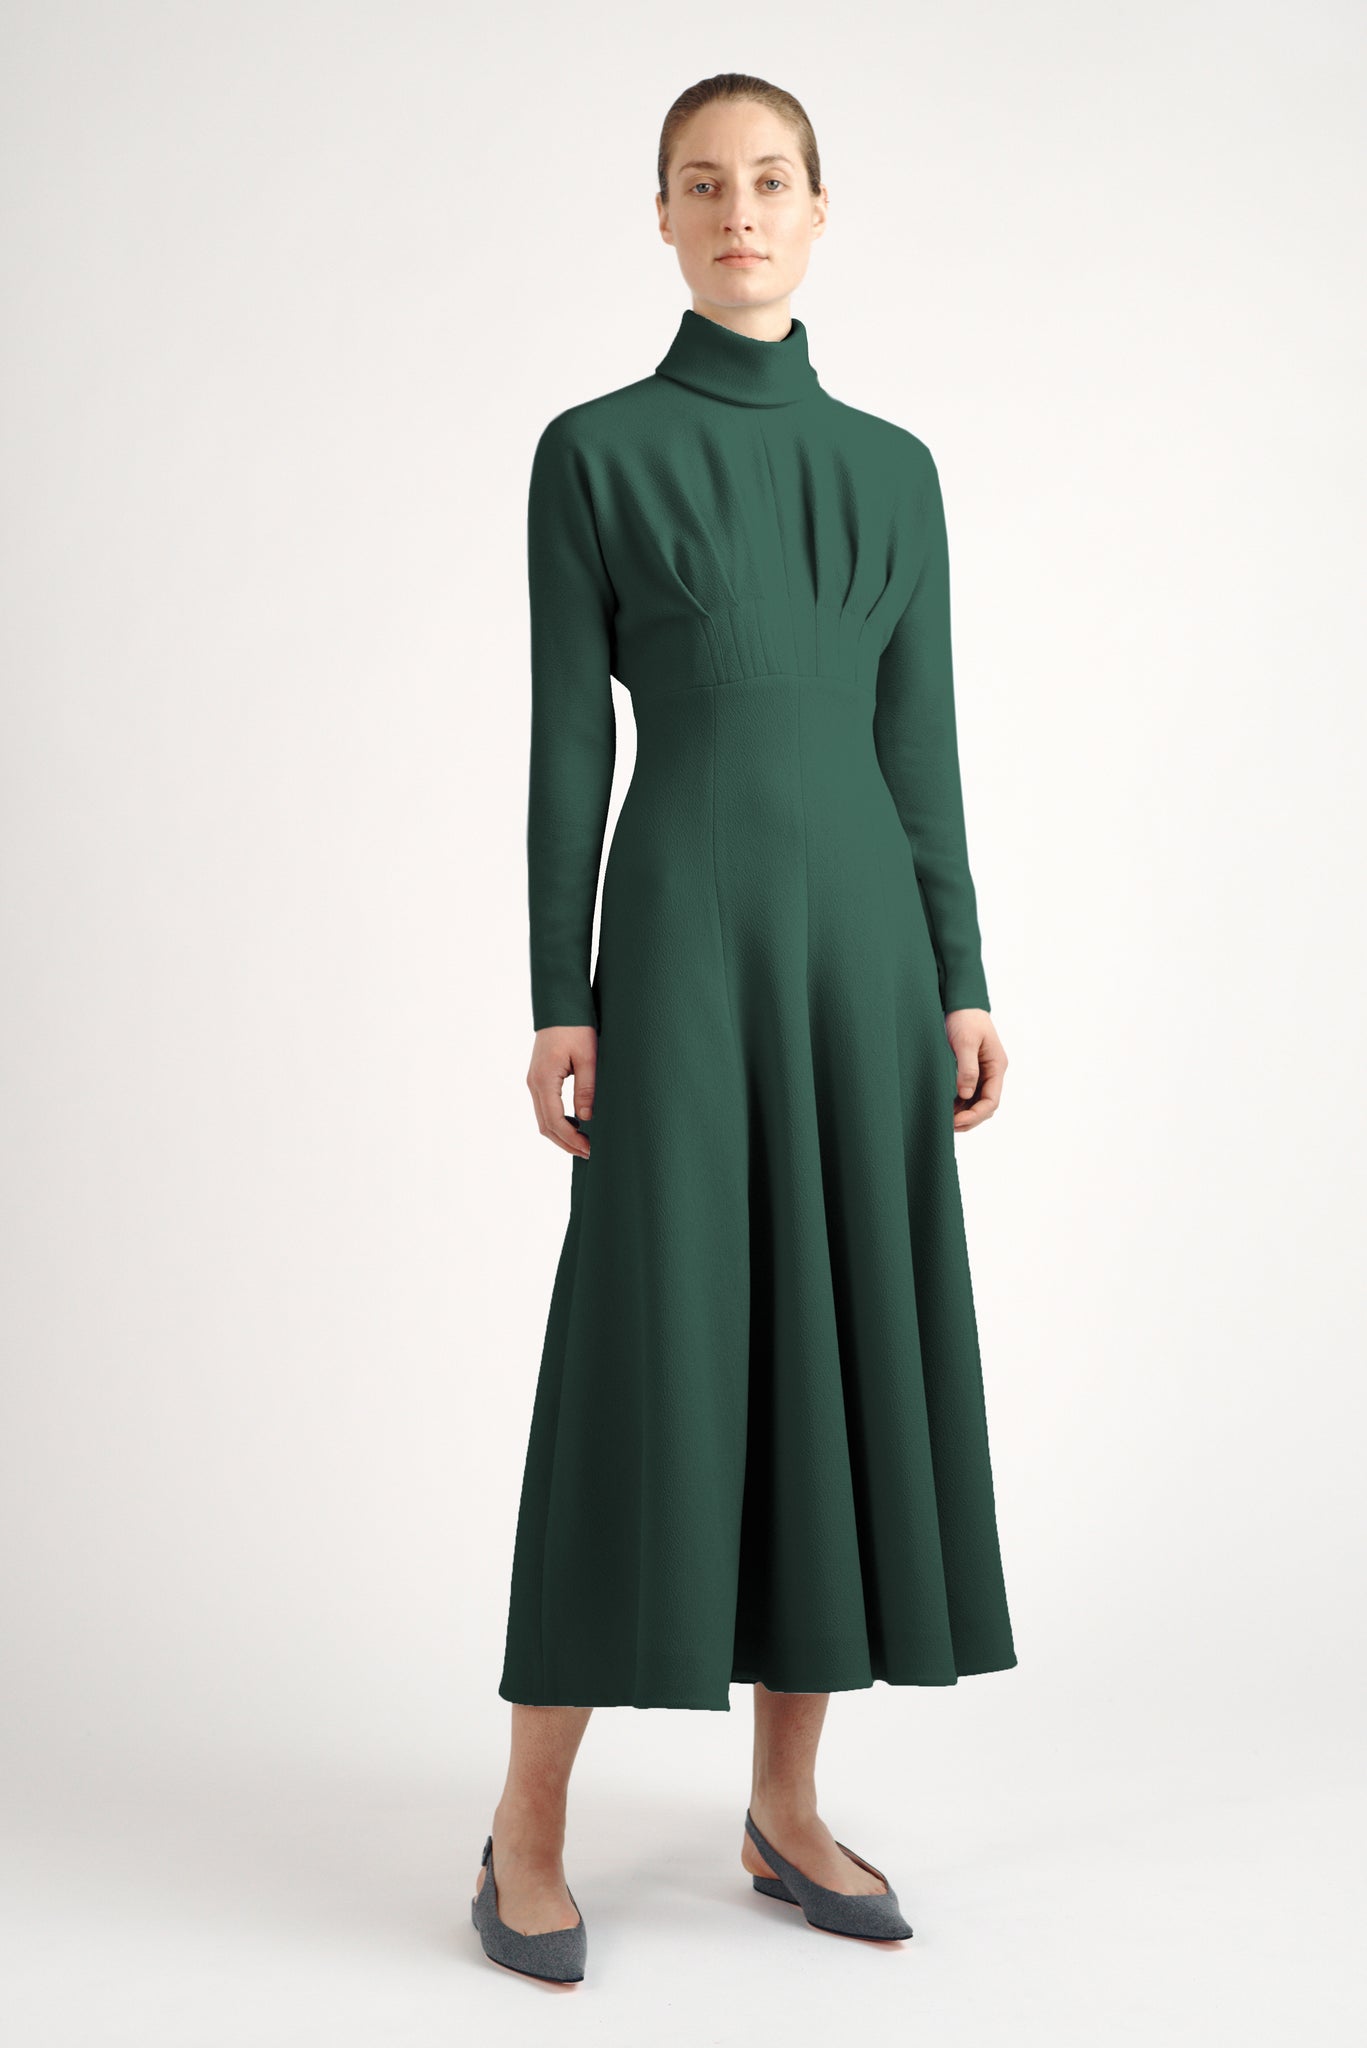 Oakley Dress | Dark Green Long Sleeve High Neck Dress | Emilia Wickstead